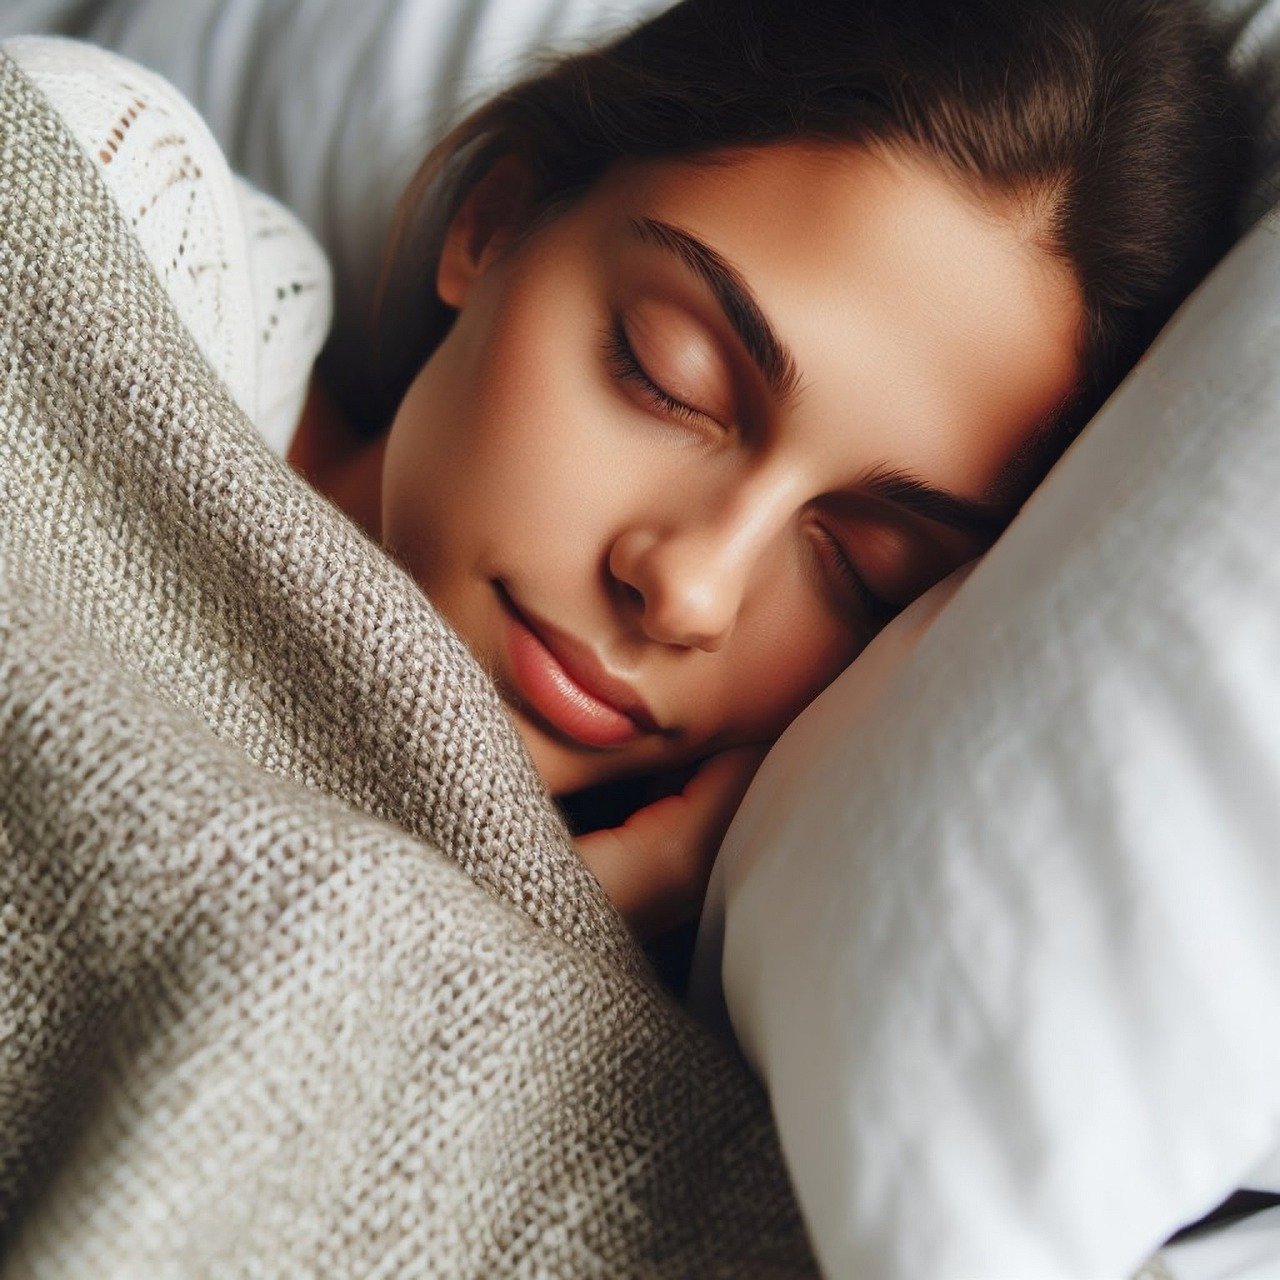 Bu Basit Akşam Rutini Daha İyi Uyumanın Anahtarı Olabilir